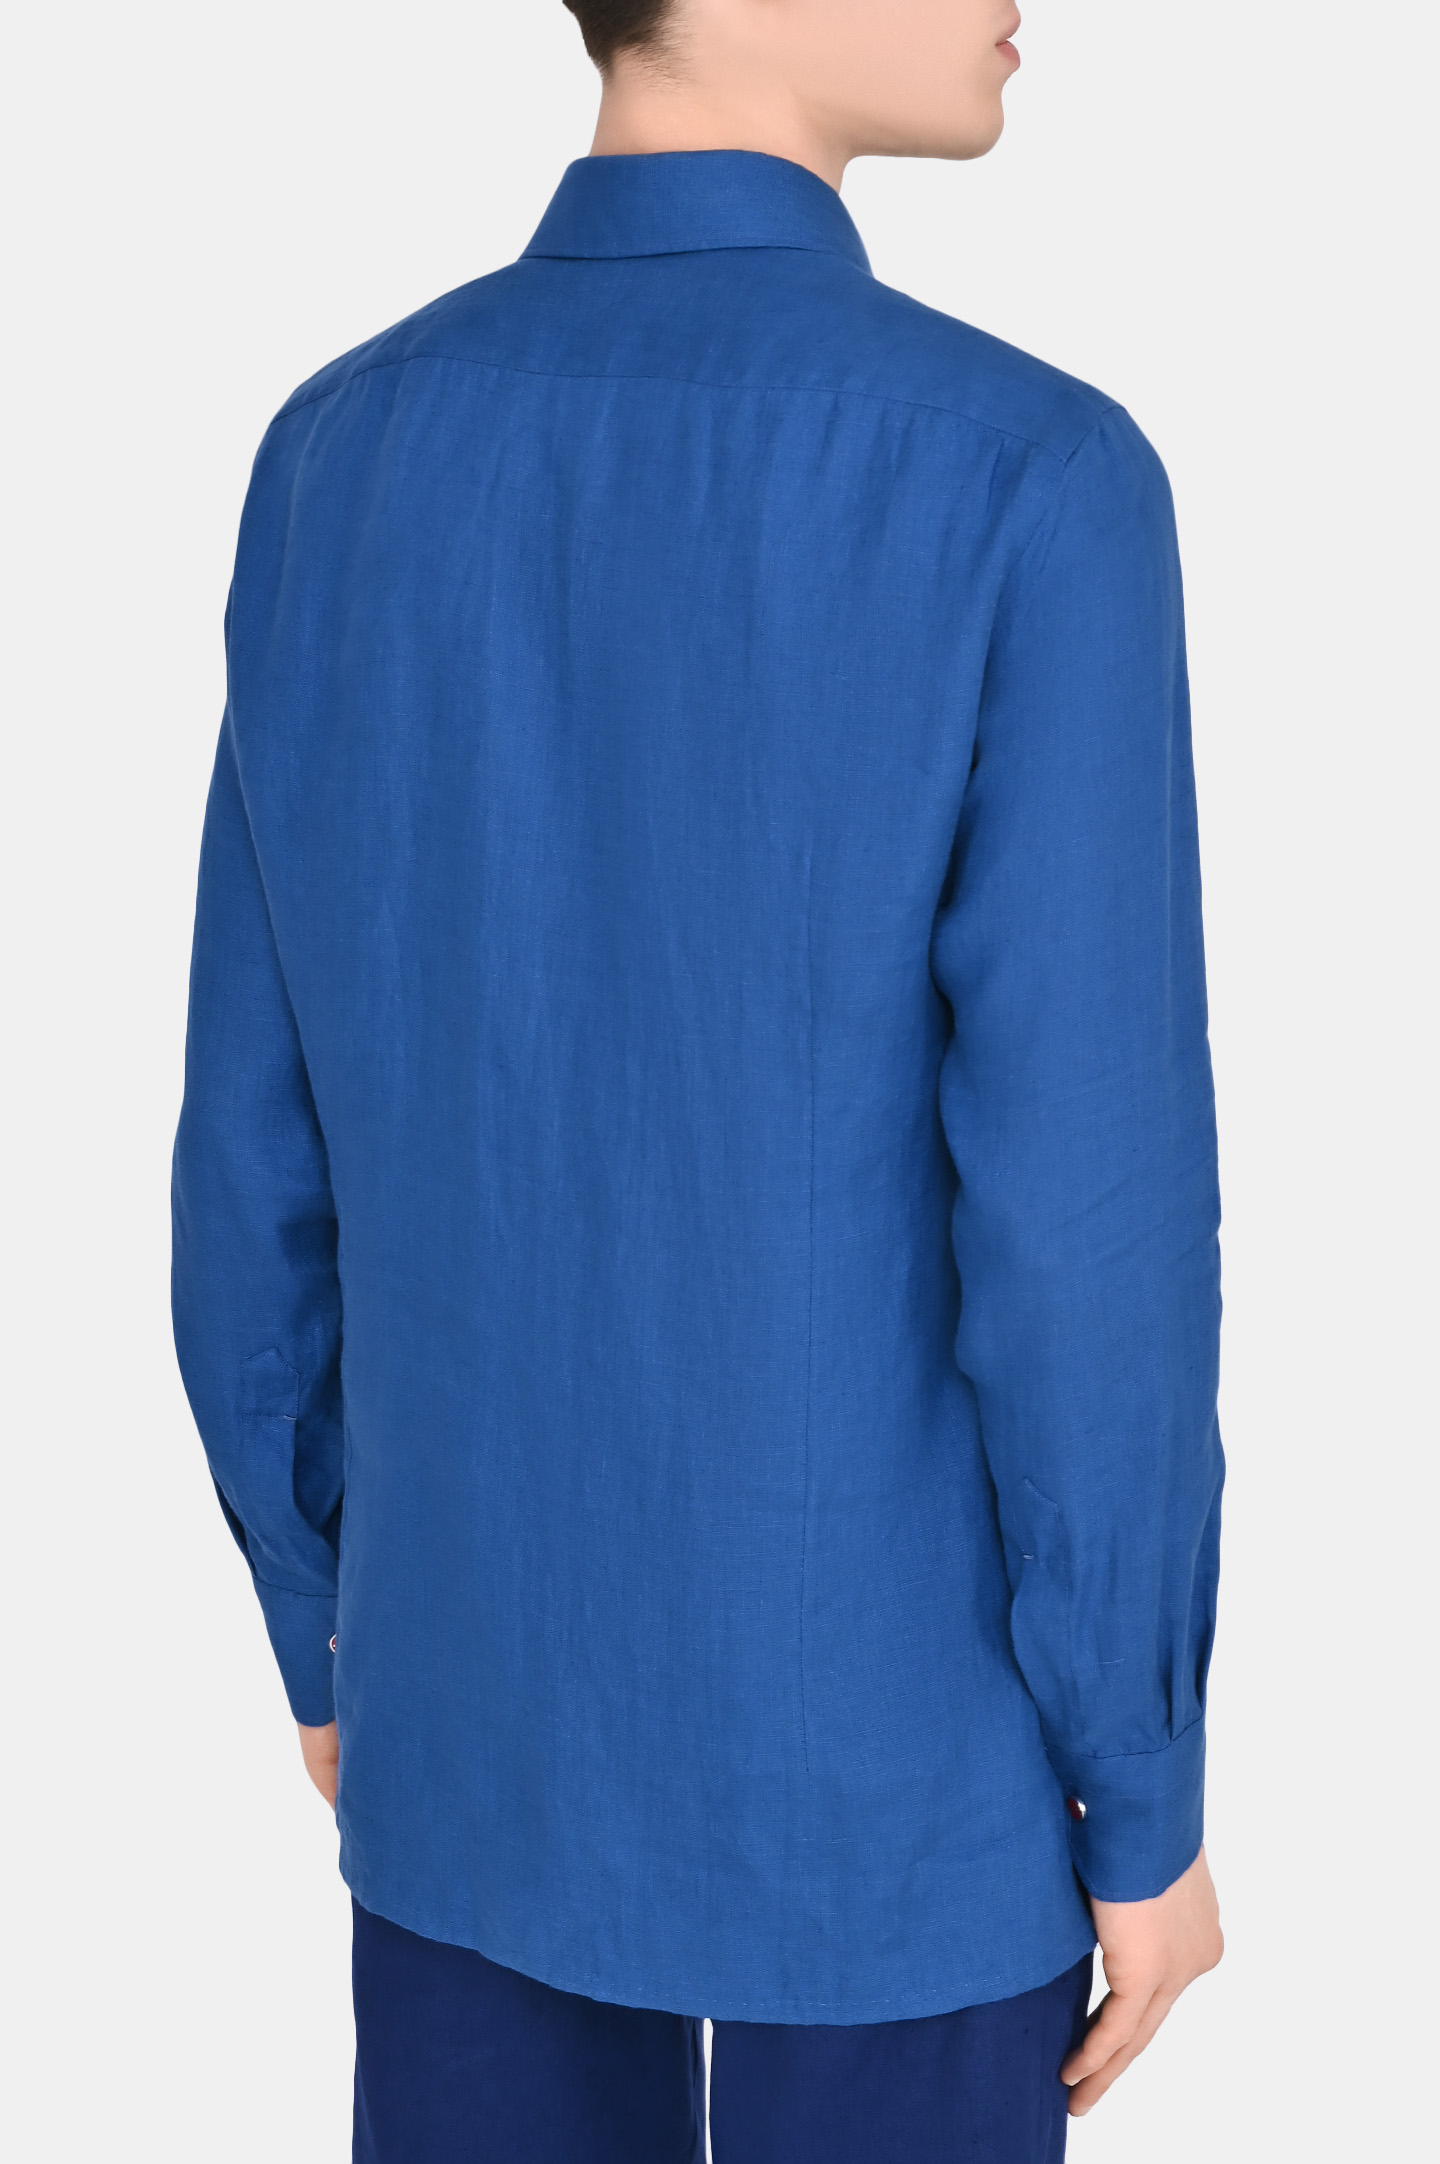 Рубашка KITON UMCNERPH084000, цвет: Синий, Мужской